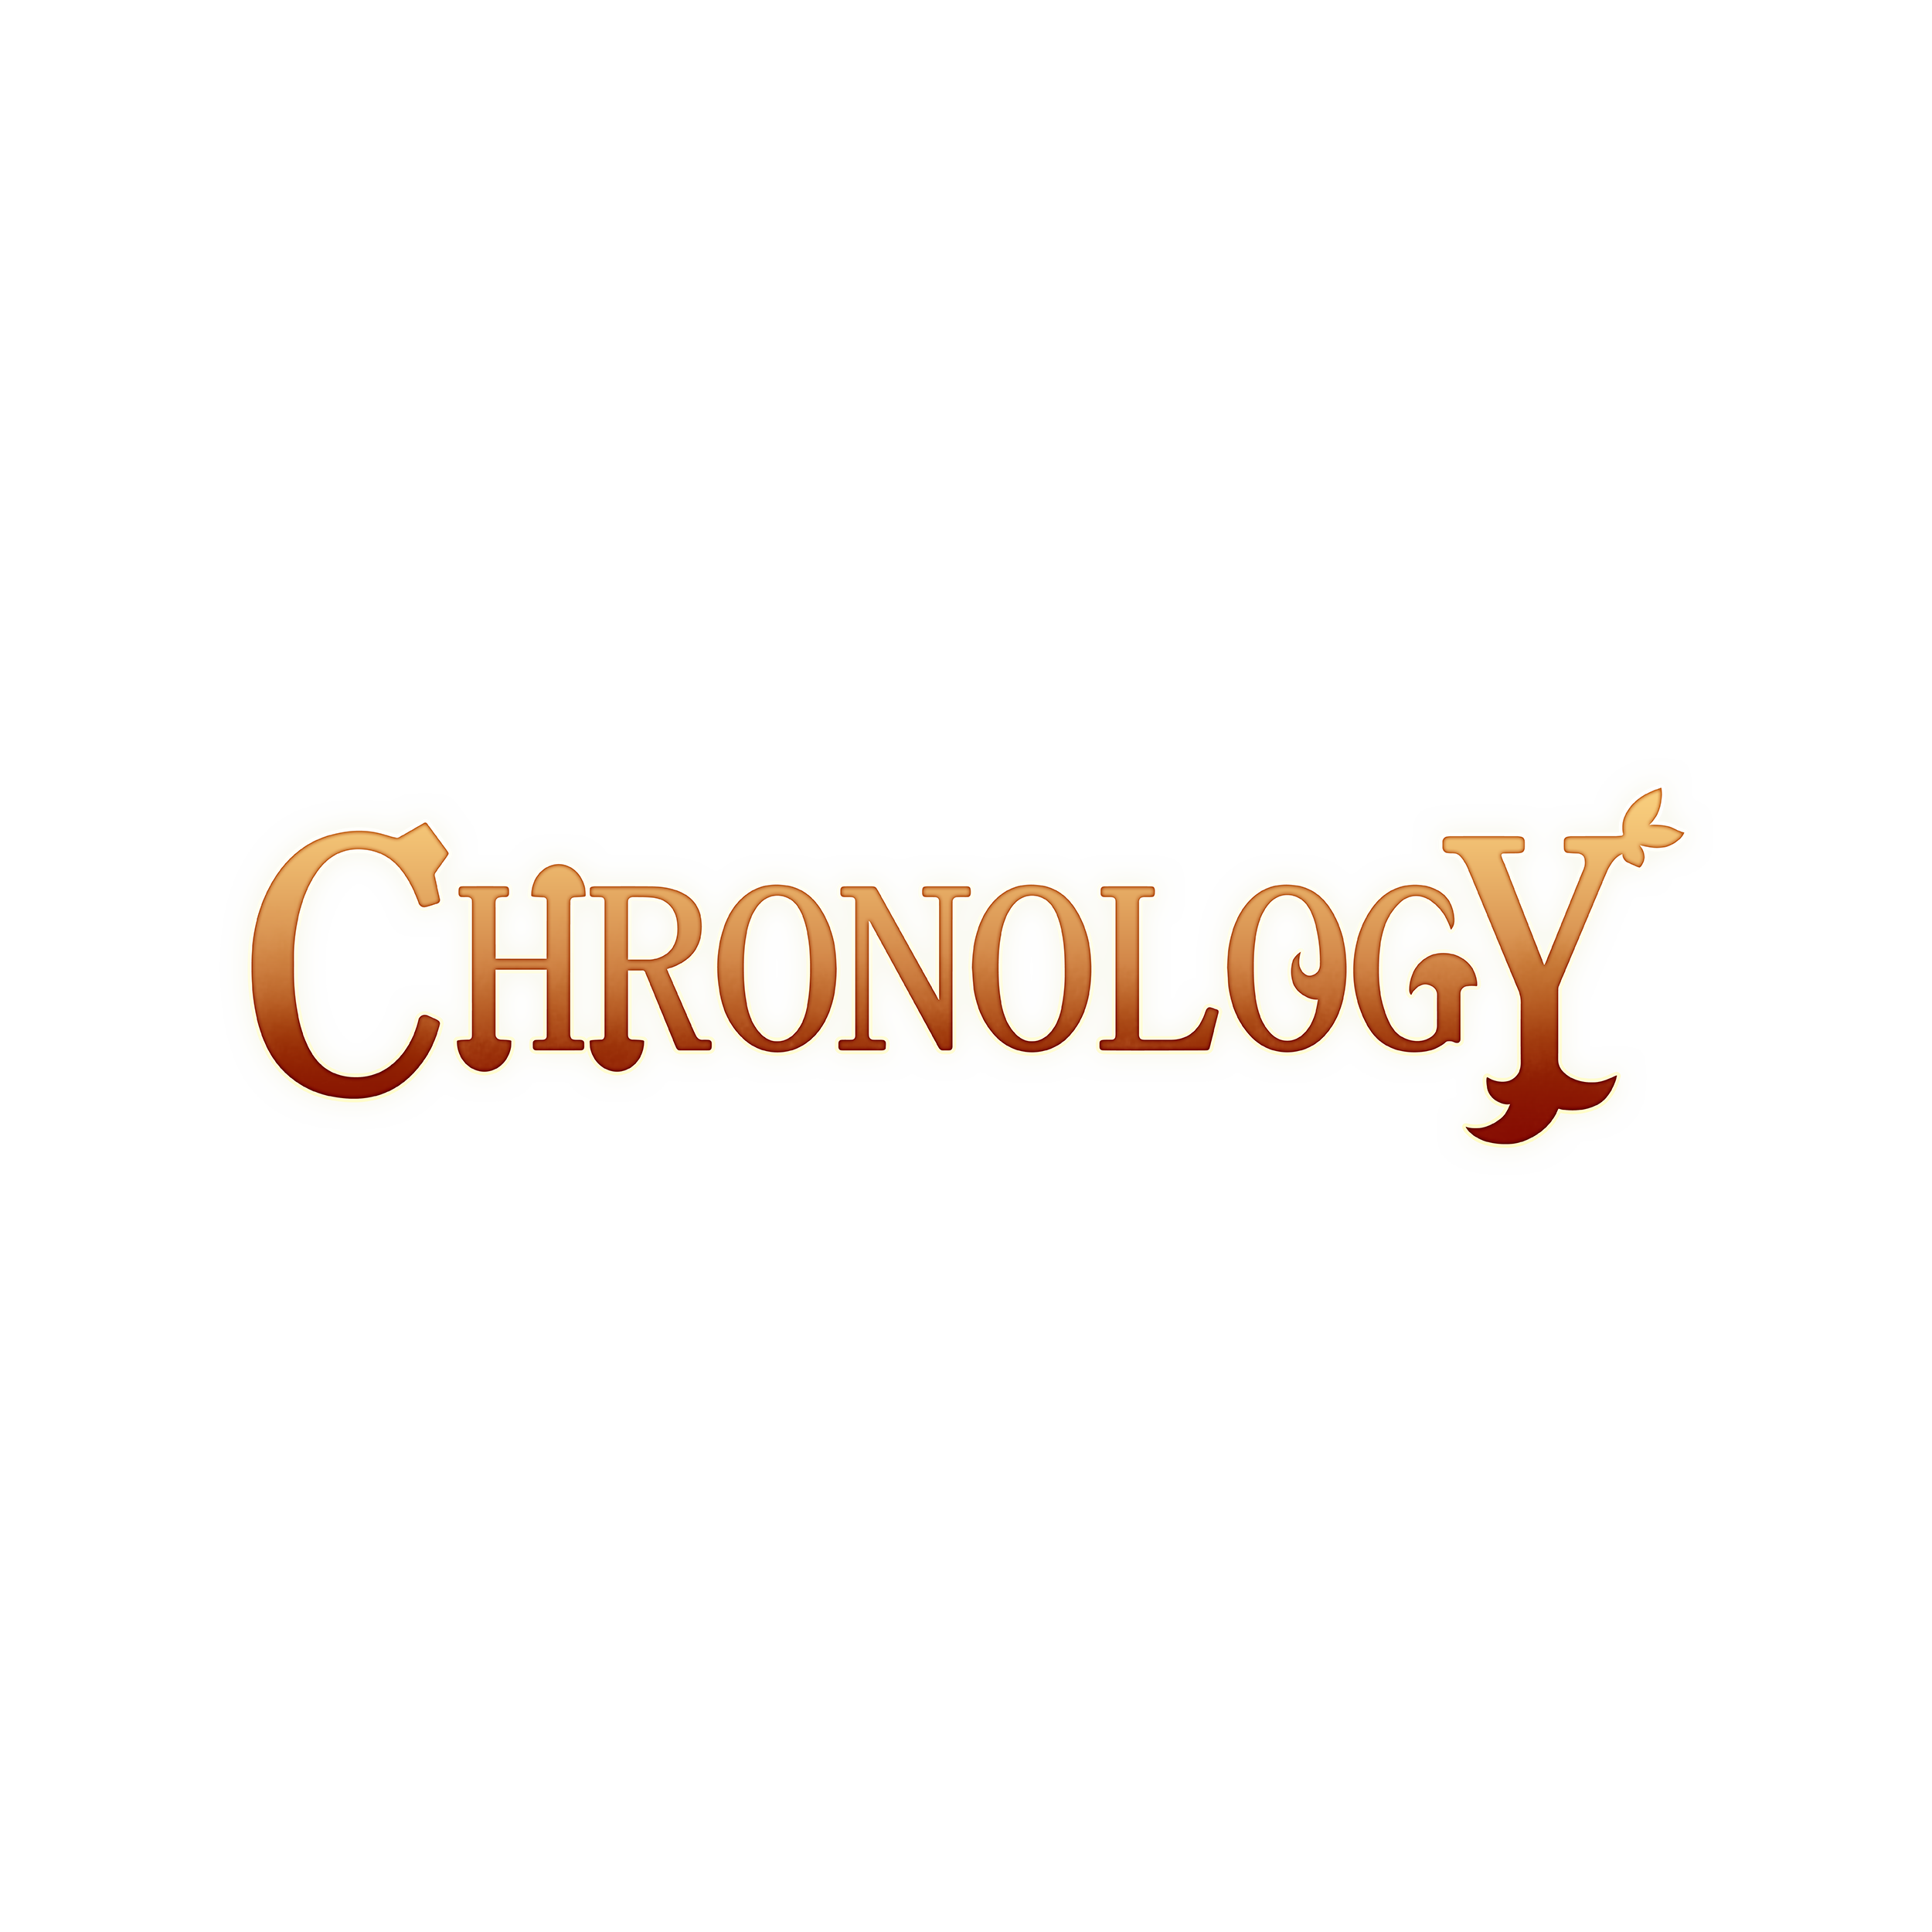 Chronology logo